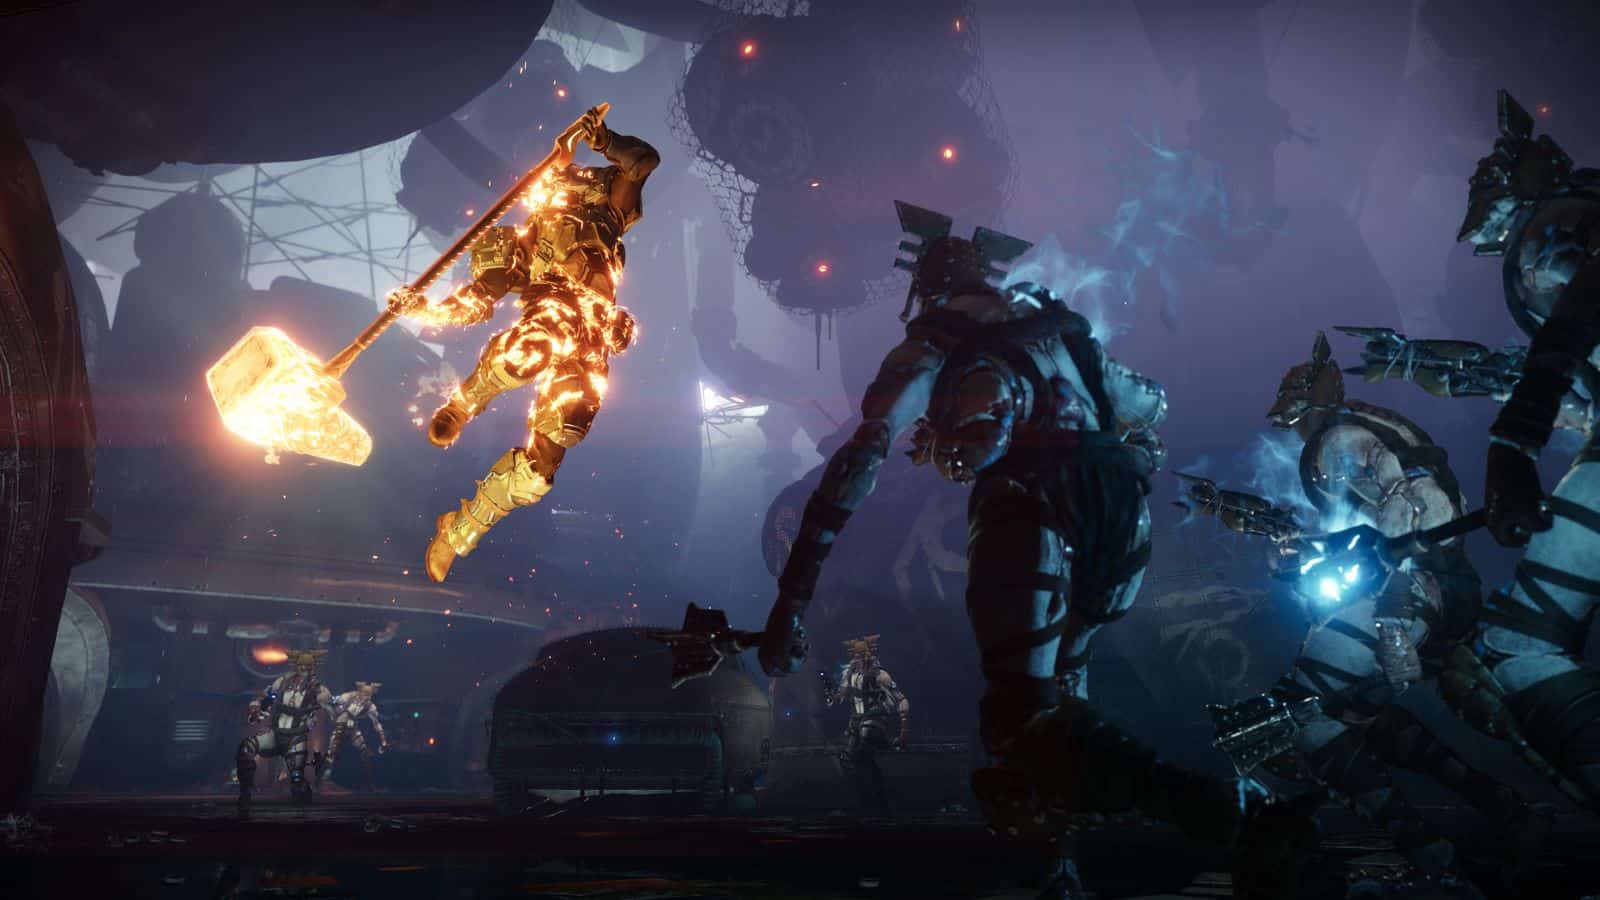 Destiny 2 Forsaken gameplay showing a Guardian battling the Scorn